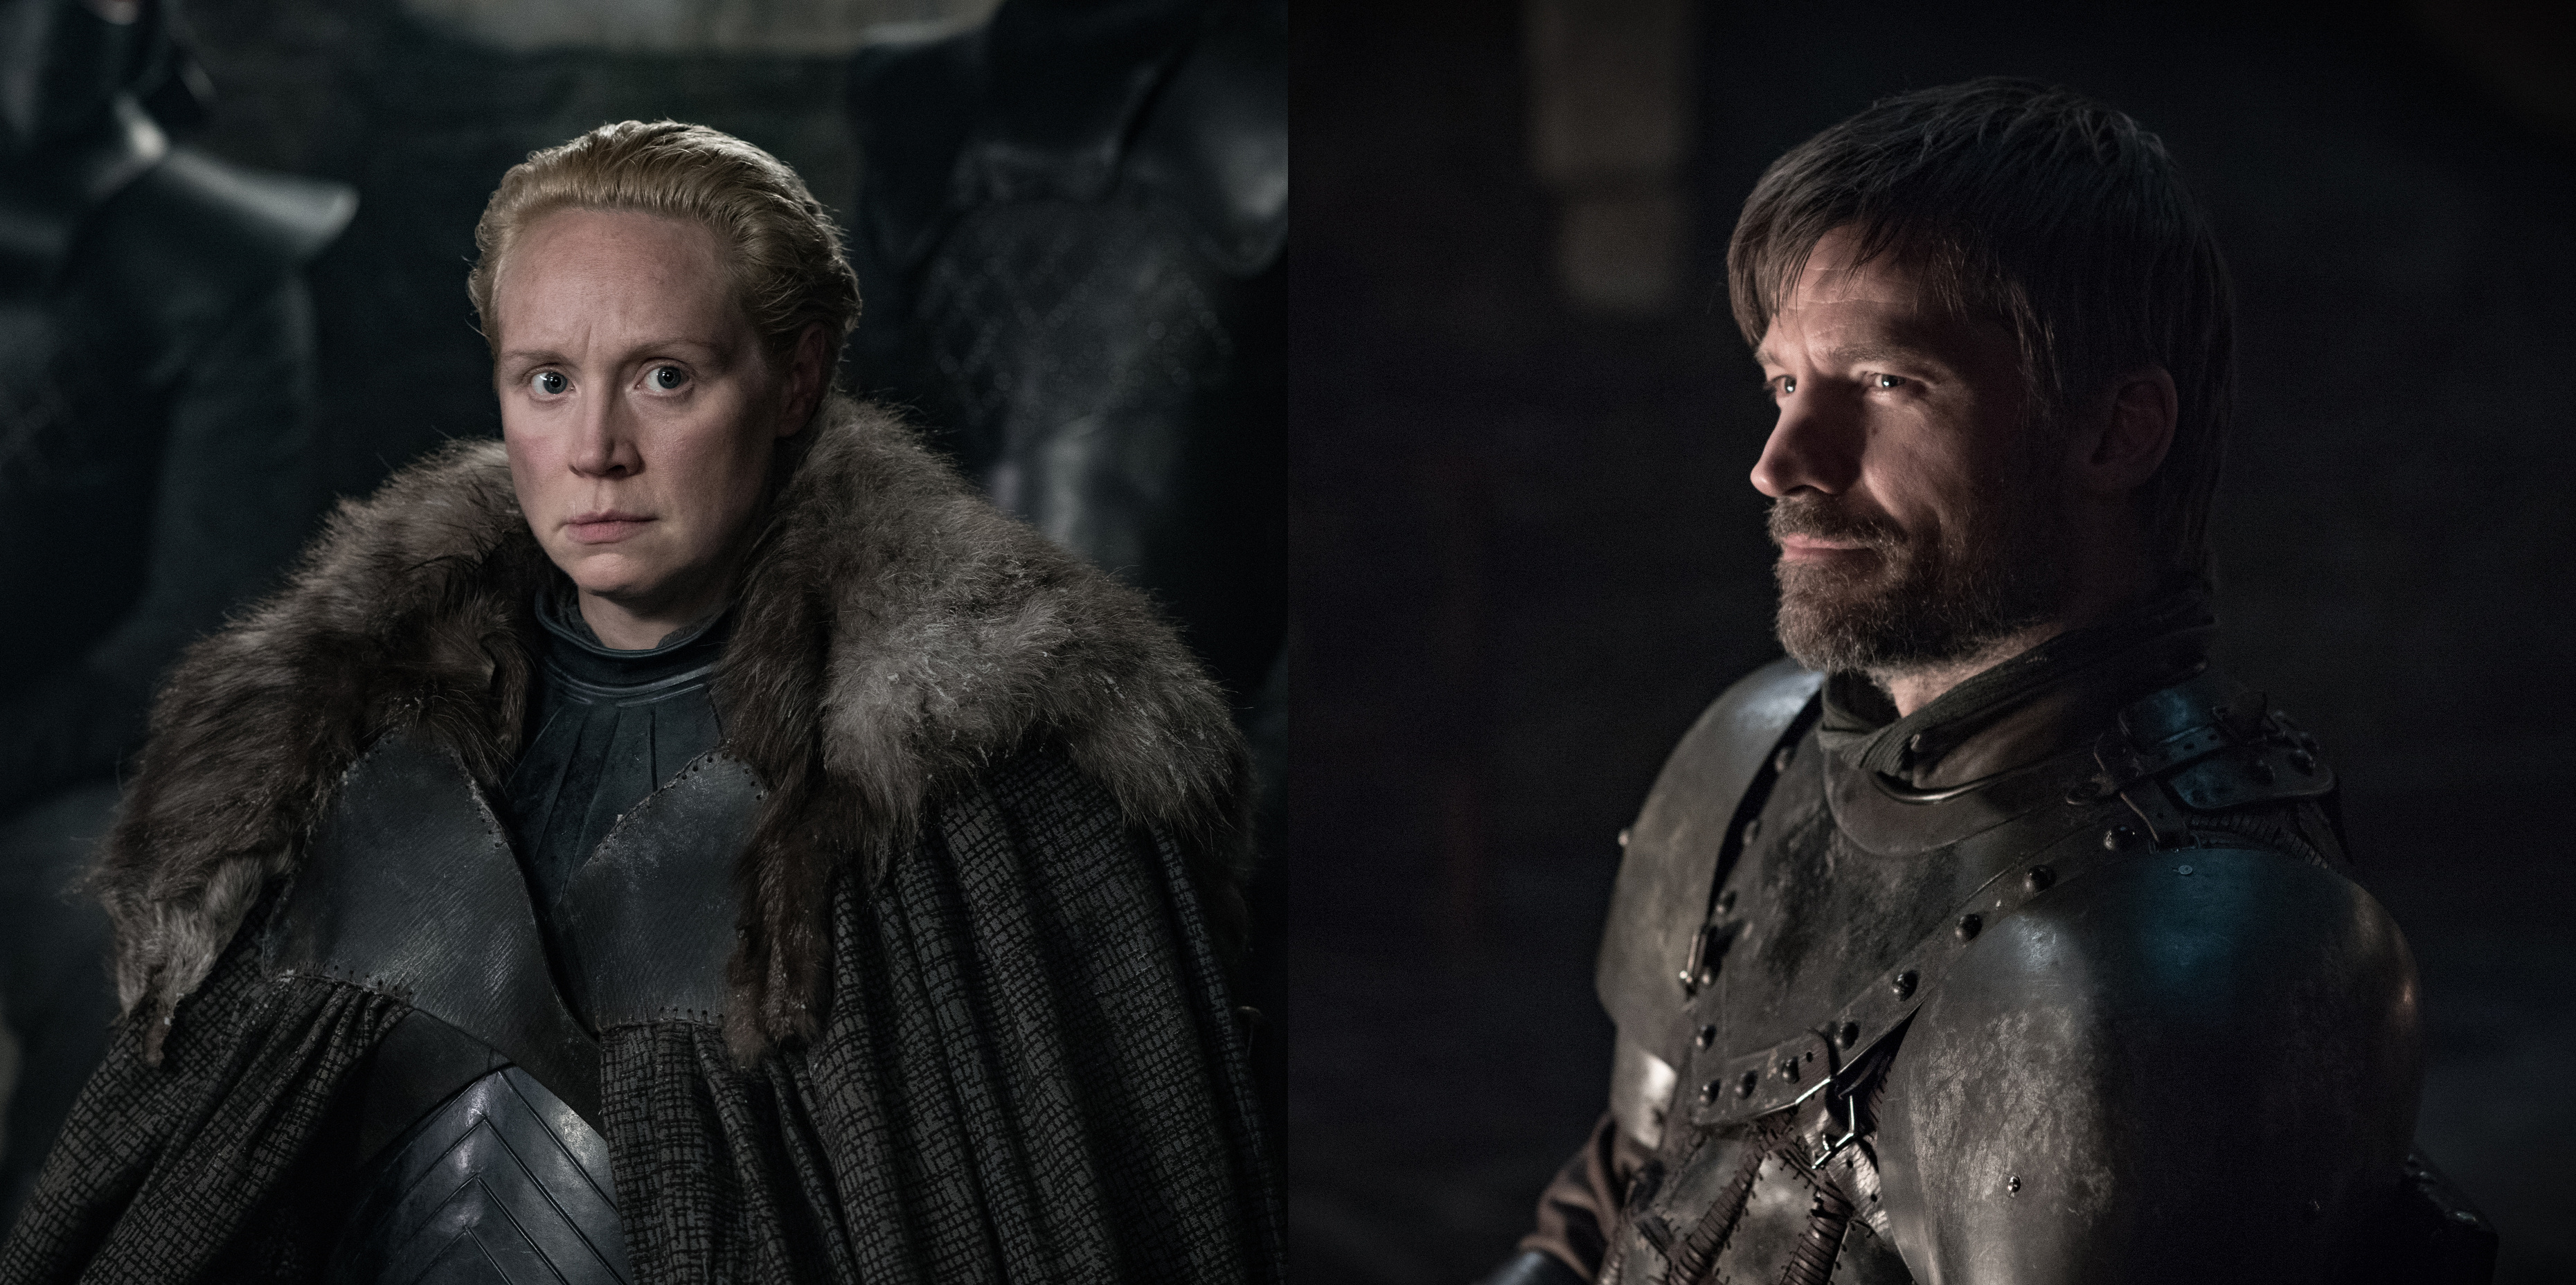 Jaime Lannister, TV show character, Brienne of Tarth, Epic duel, 3720x1860 Dual Screen Desktop